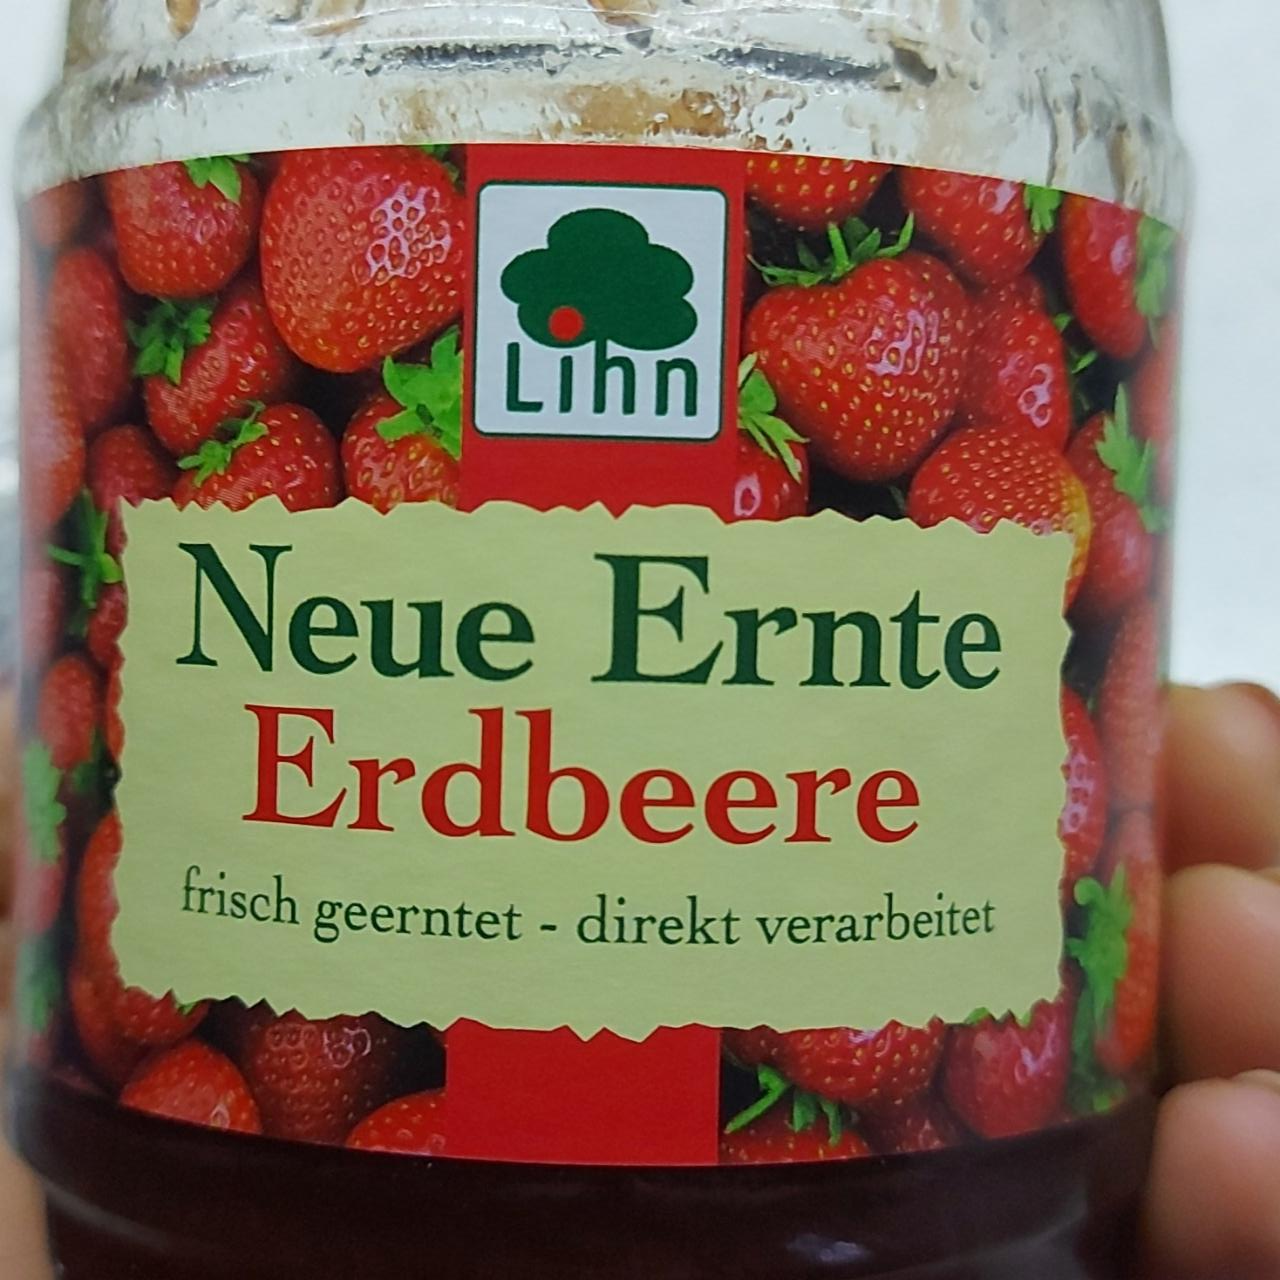 Fotografie - Neue Ernte Erdbeere Lihn